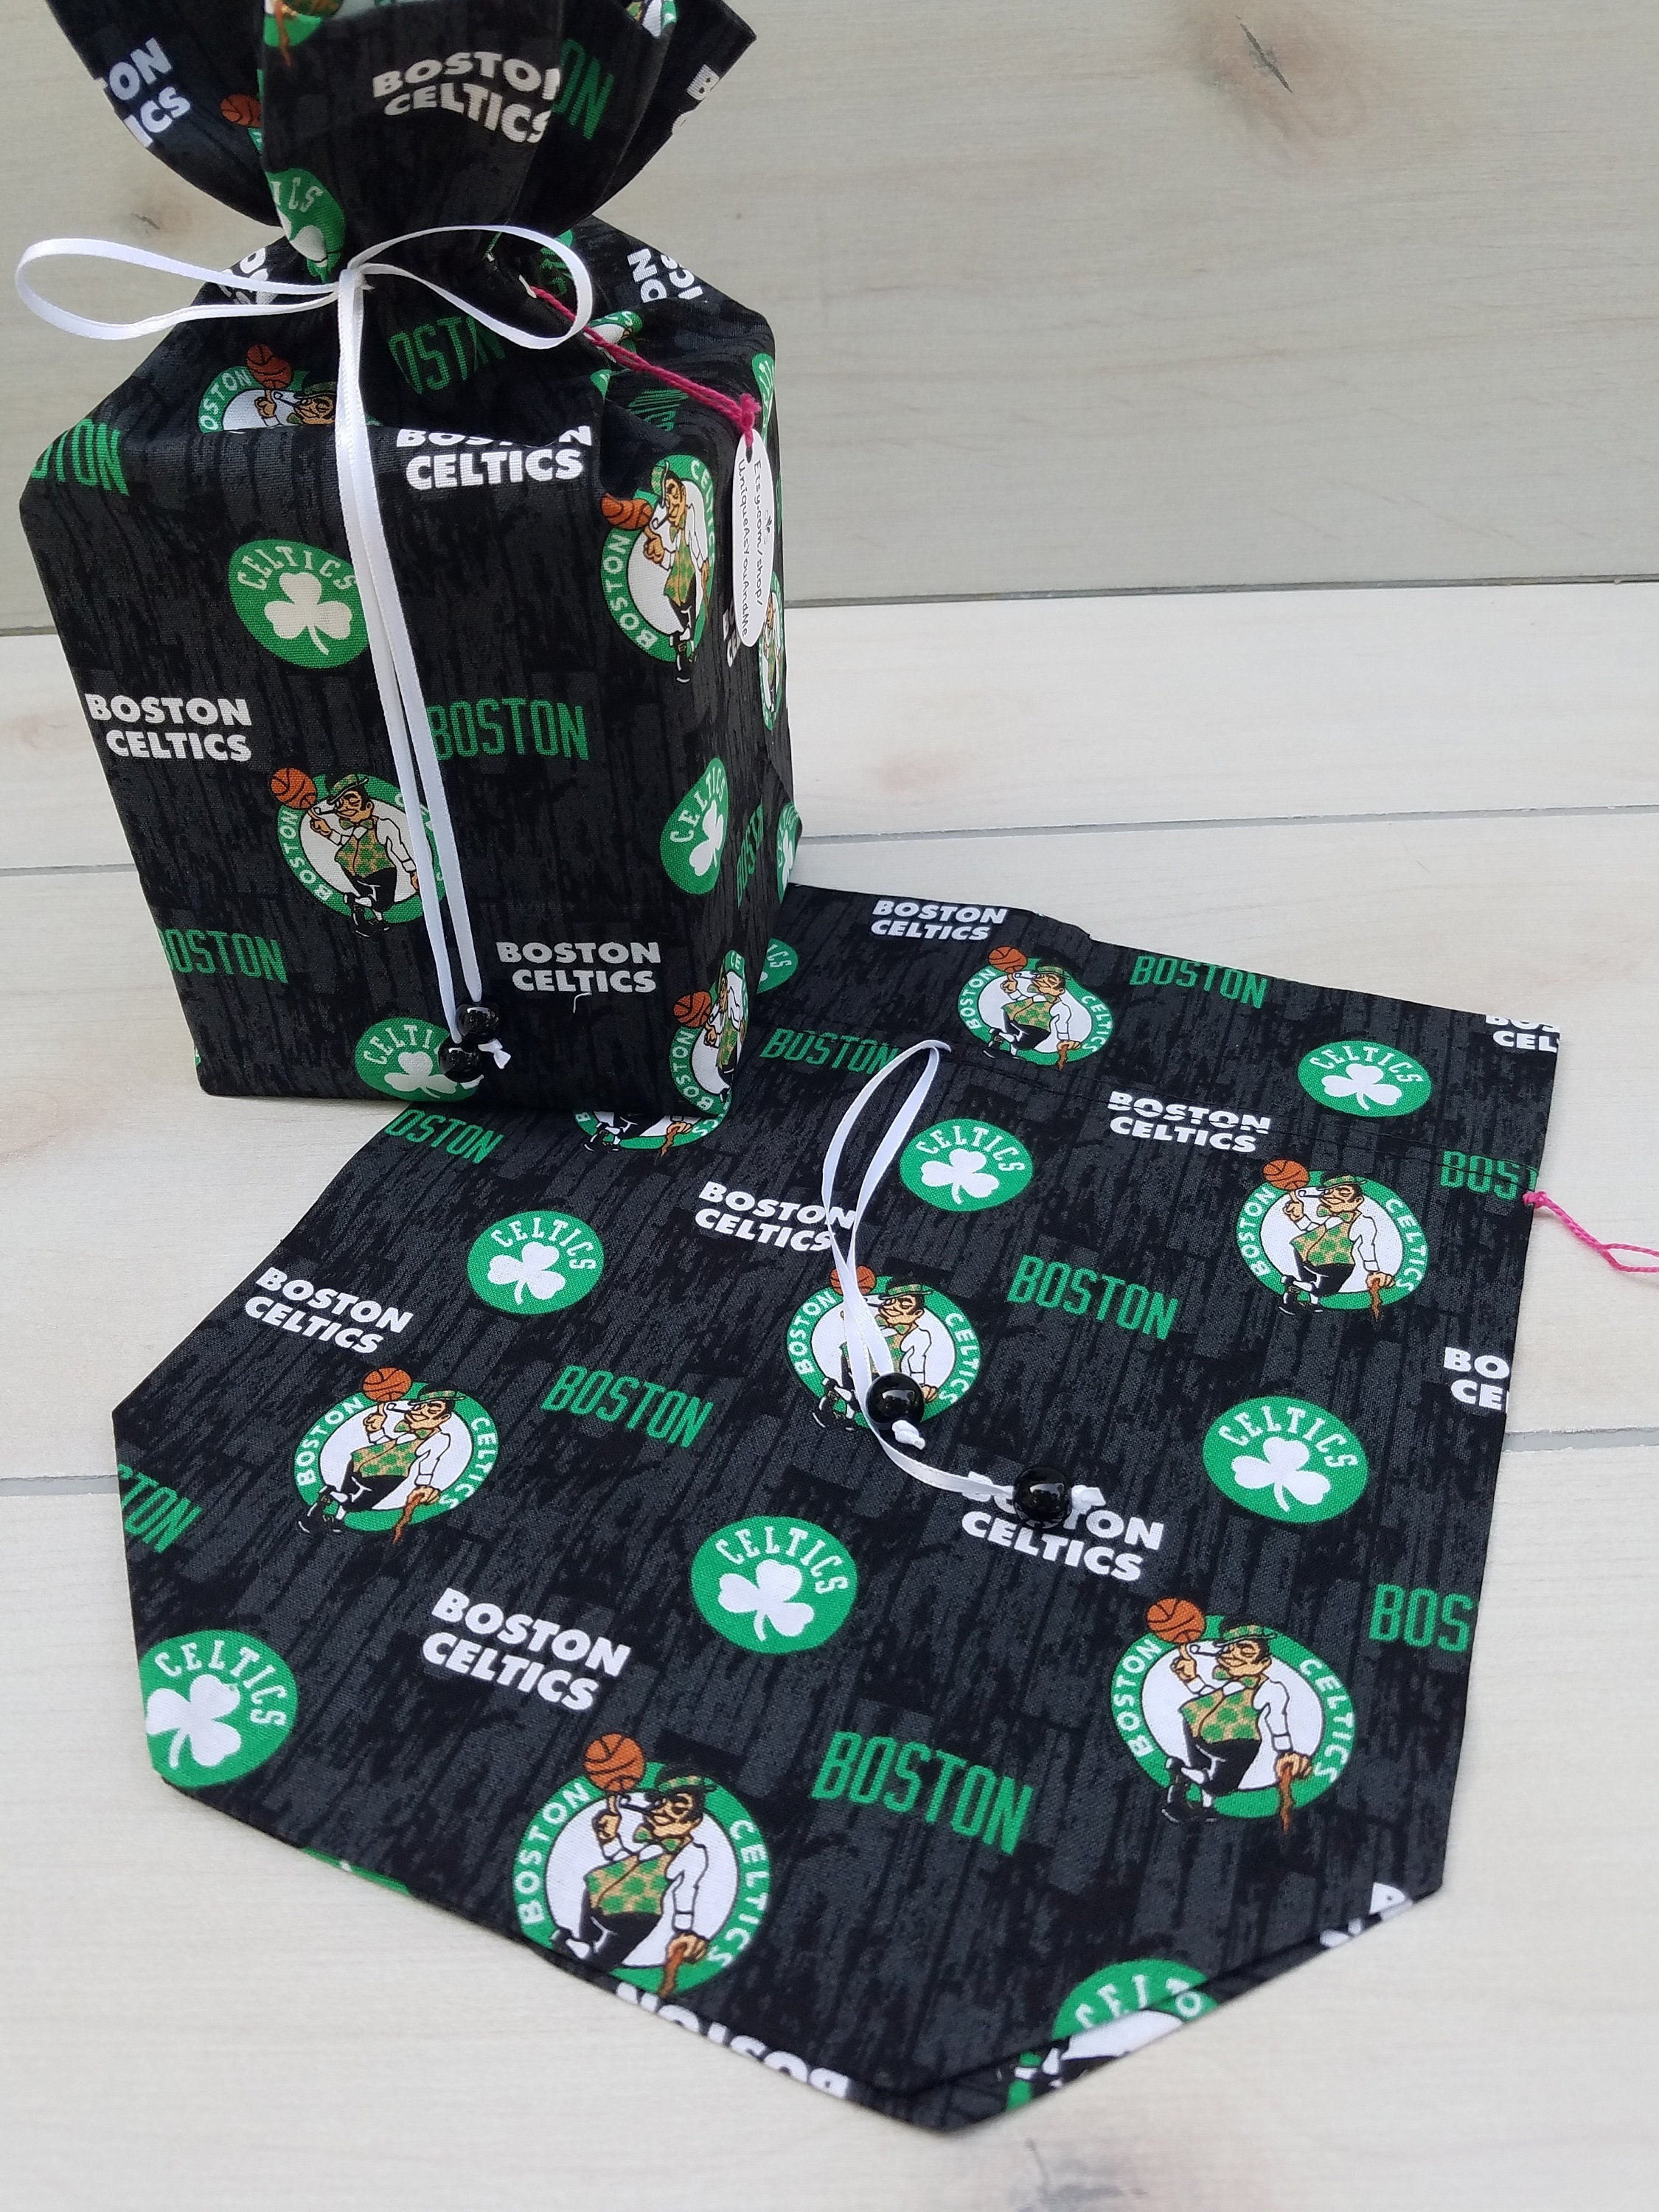 Boston Celtics Vacation Hawaiian Shirt For Men And Women Gift Beach -  Banantees